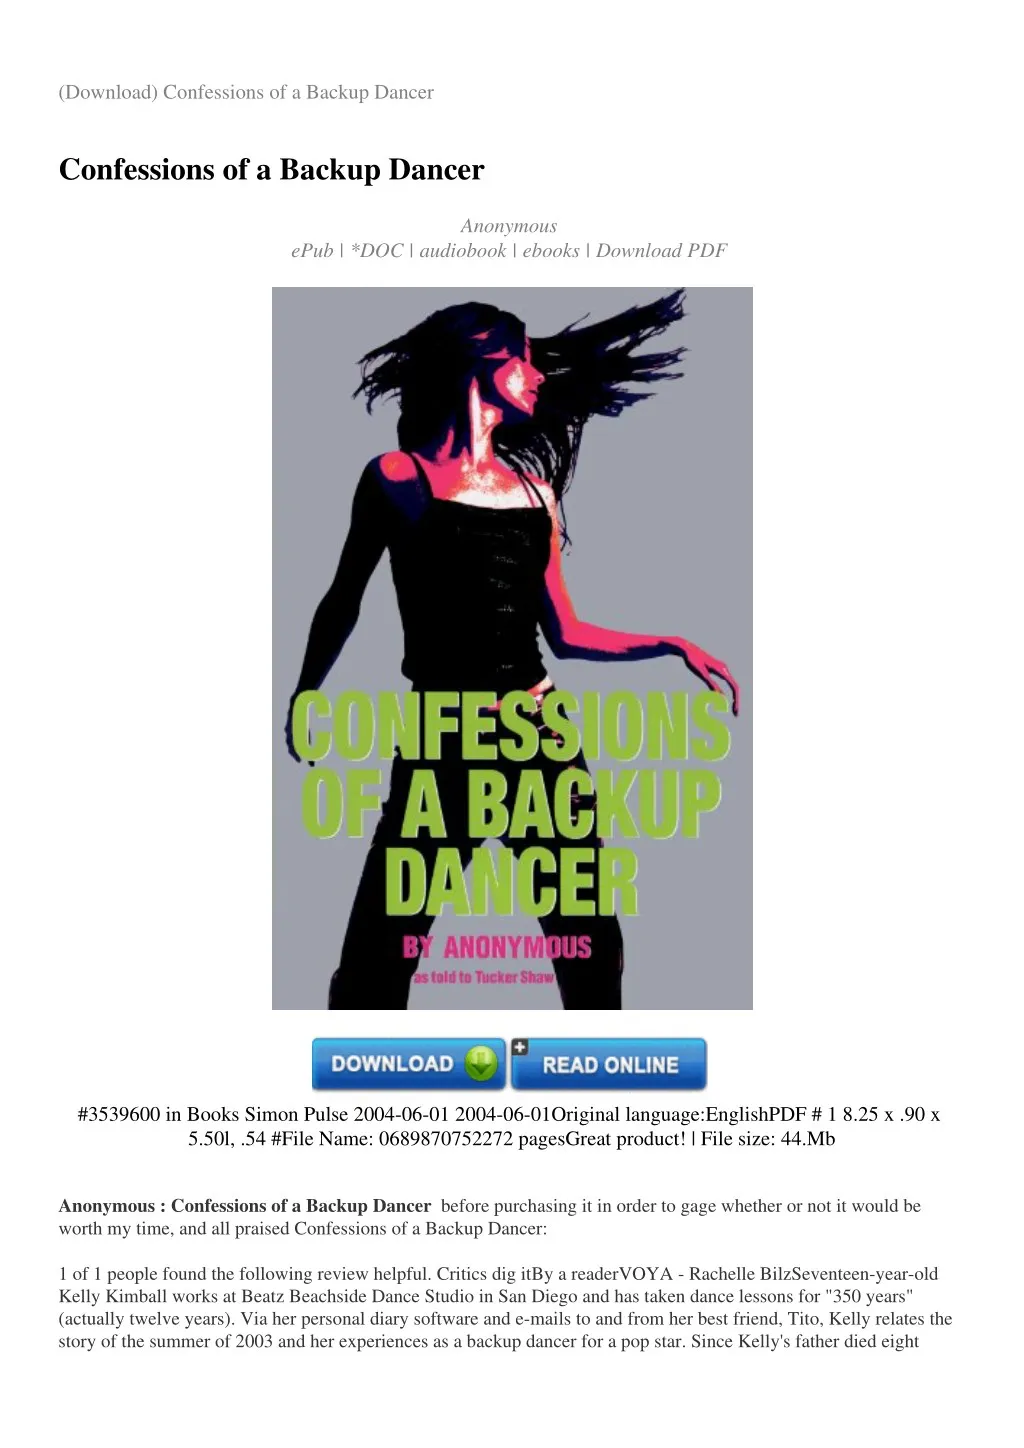 download confessions of a backup dancer